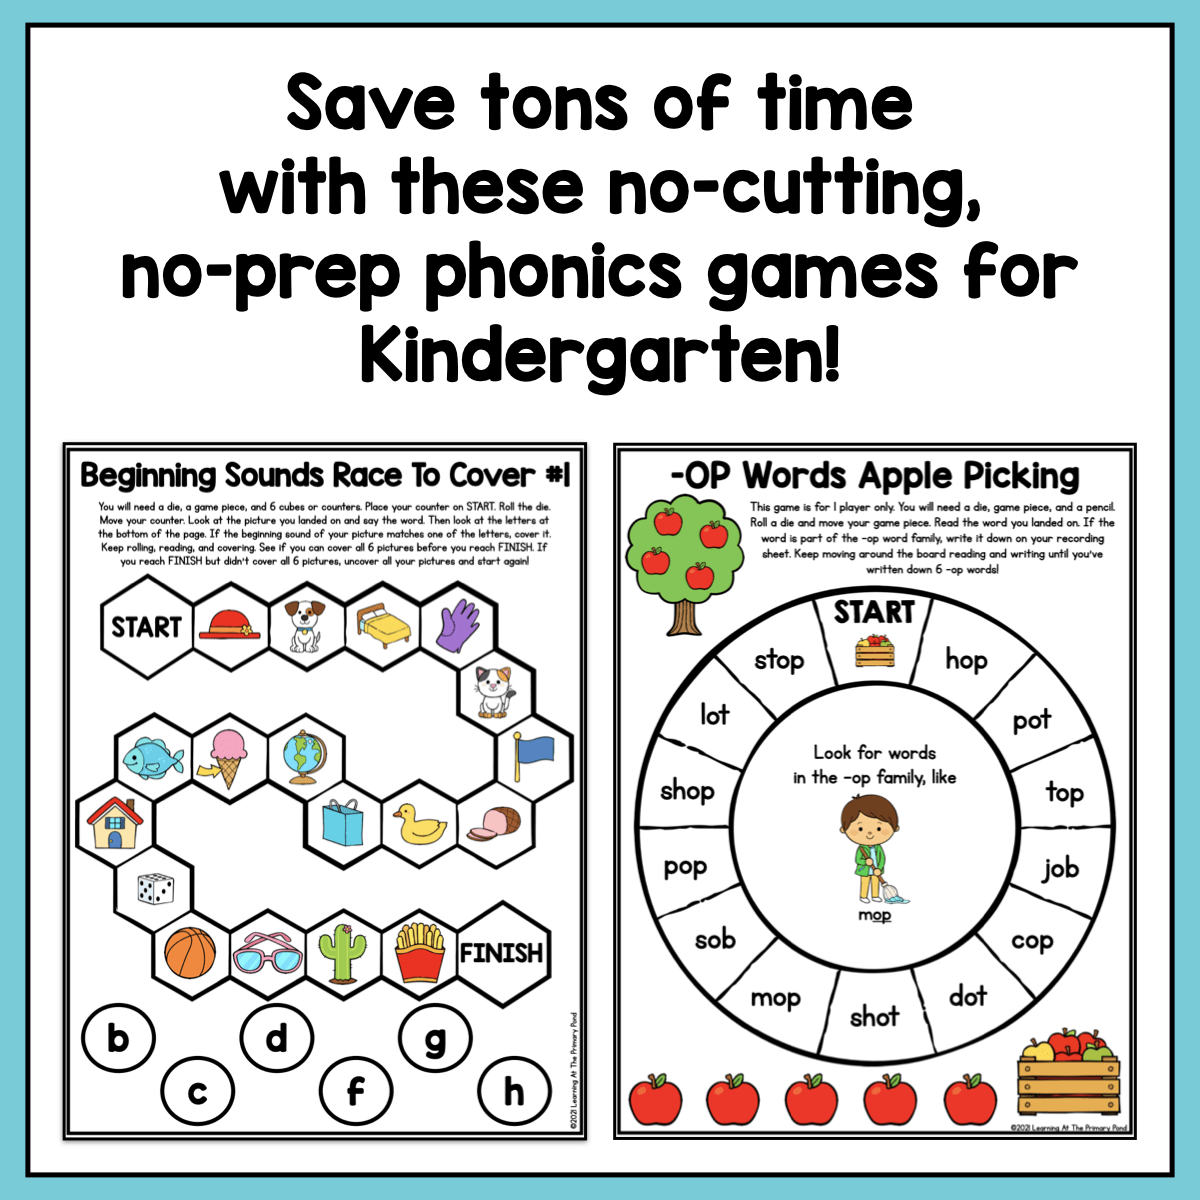 Kindergarten No-Prep Phonics Games Bundle - Sale - learning-at-the-primary-pond